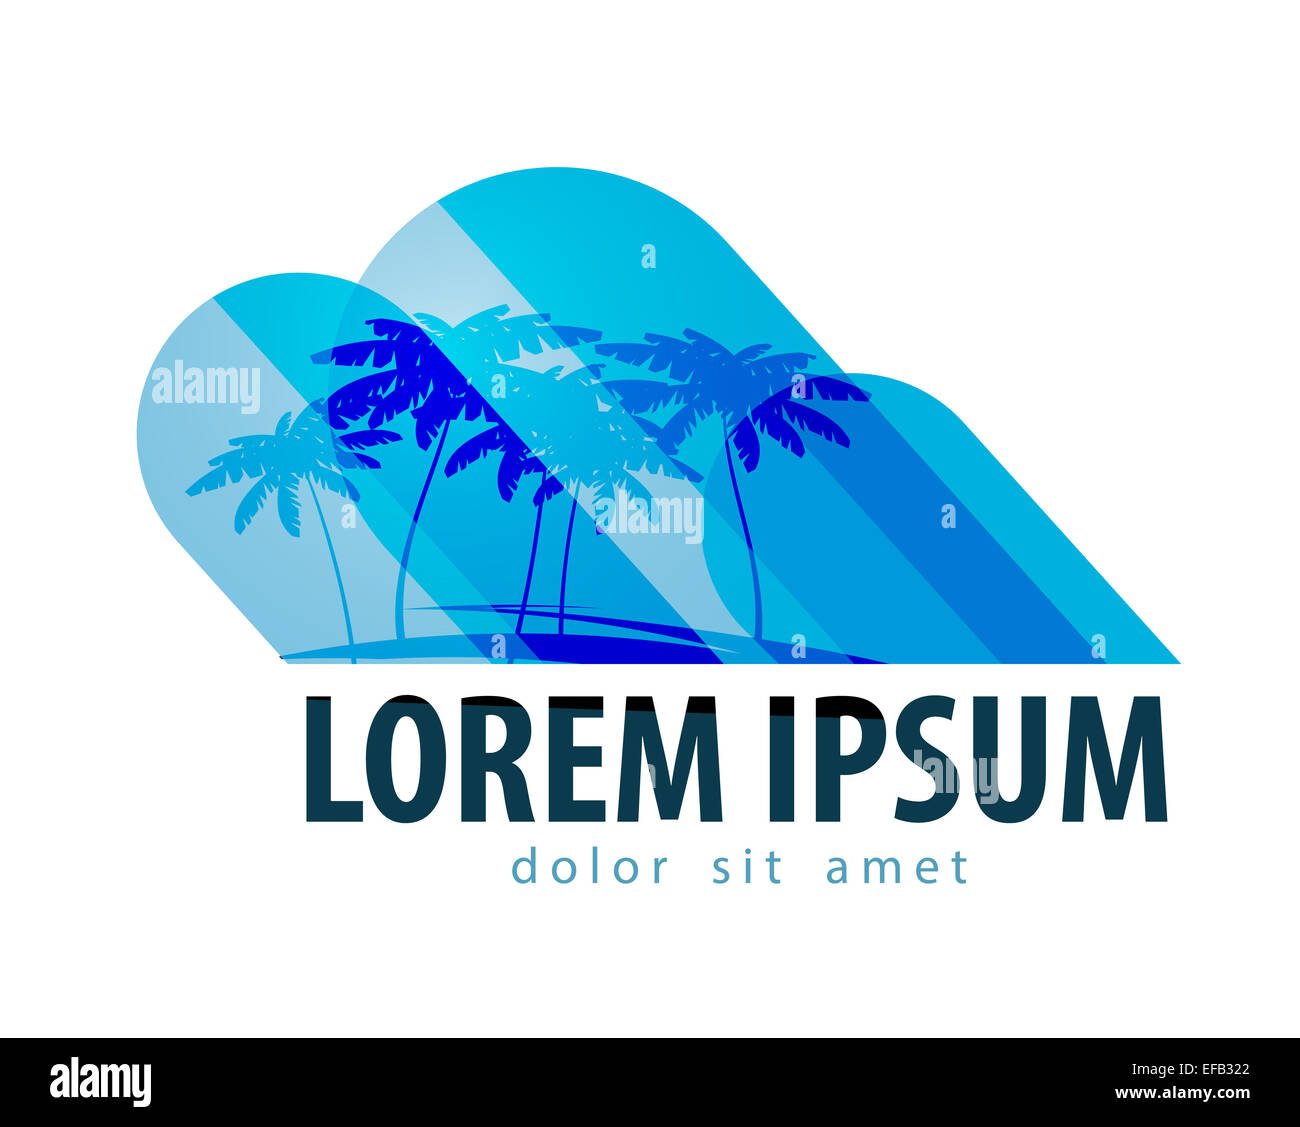 tropics logo design template. Palm trees or travel icon. Stock Photo